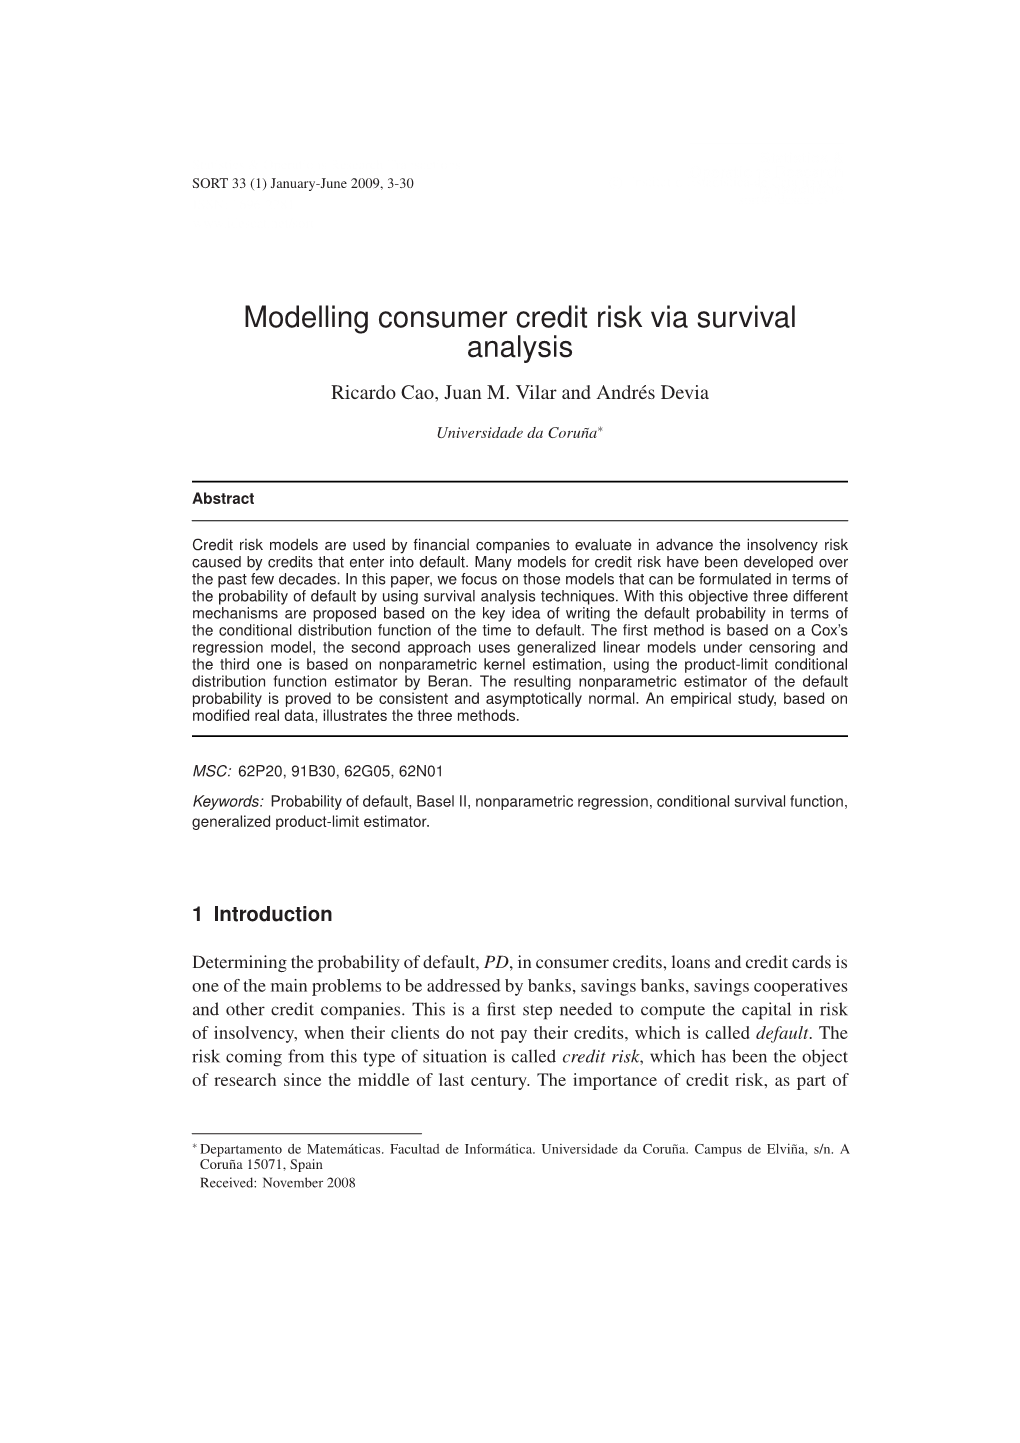 Idescat. SORT. Modelling Consumer Credit Risk Via Survival Analysis